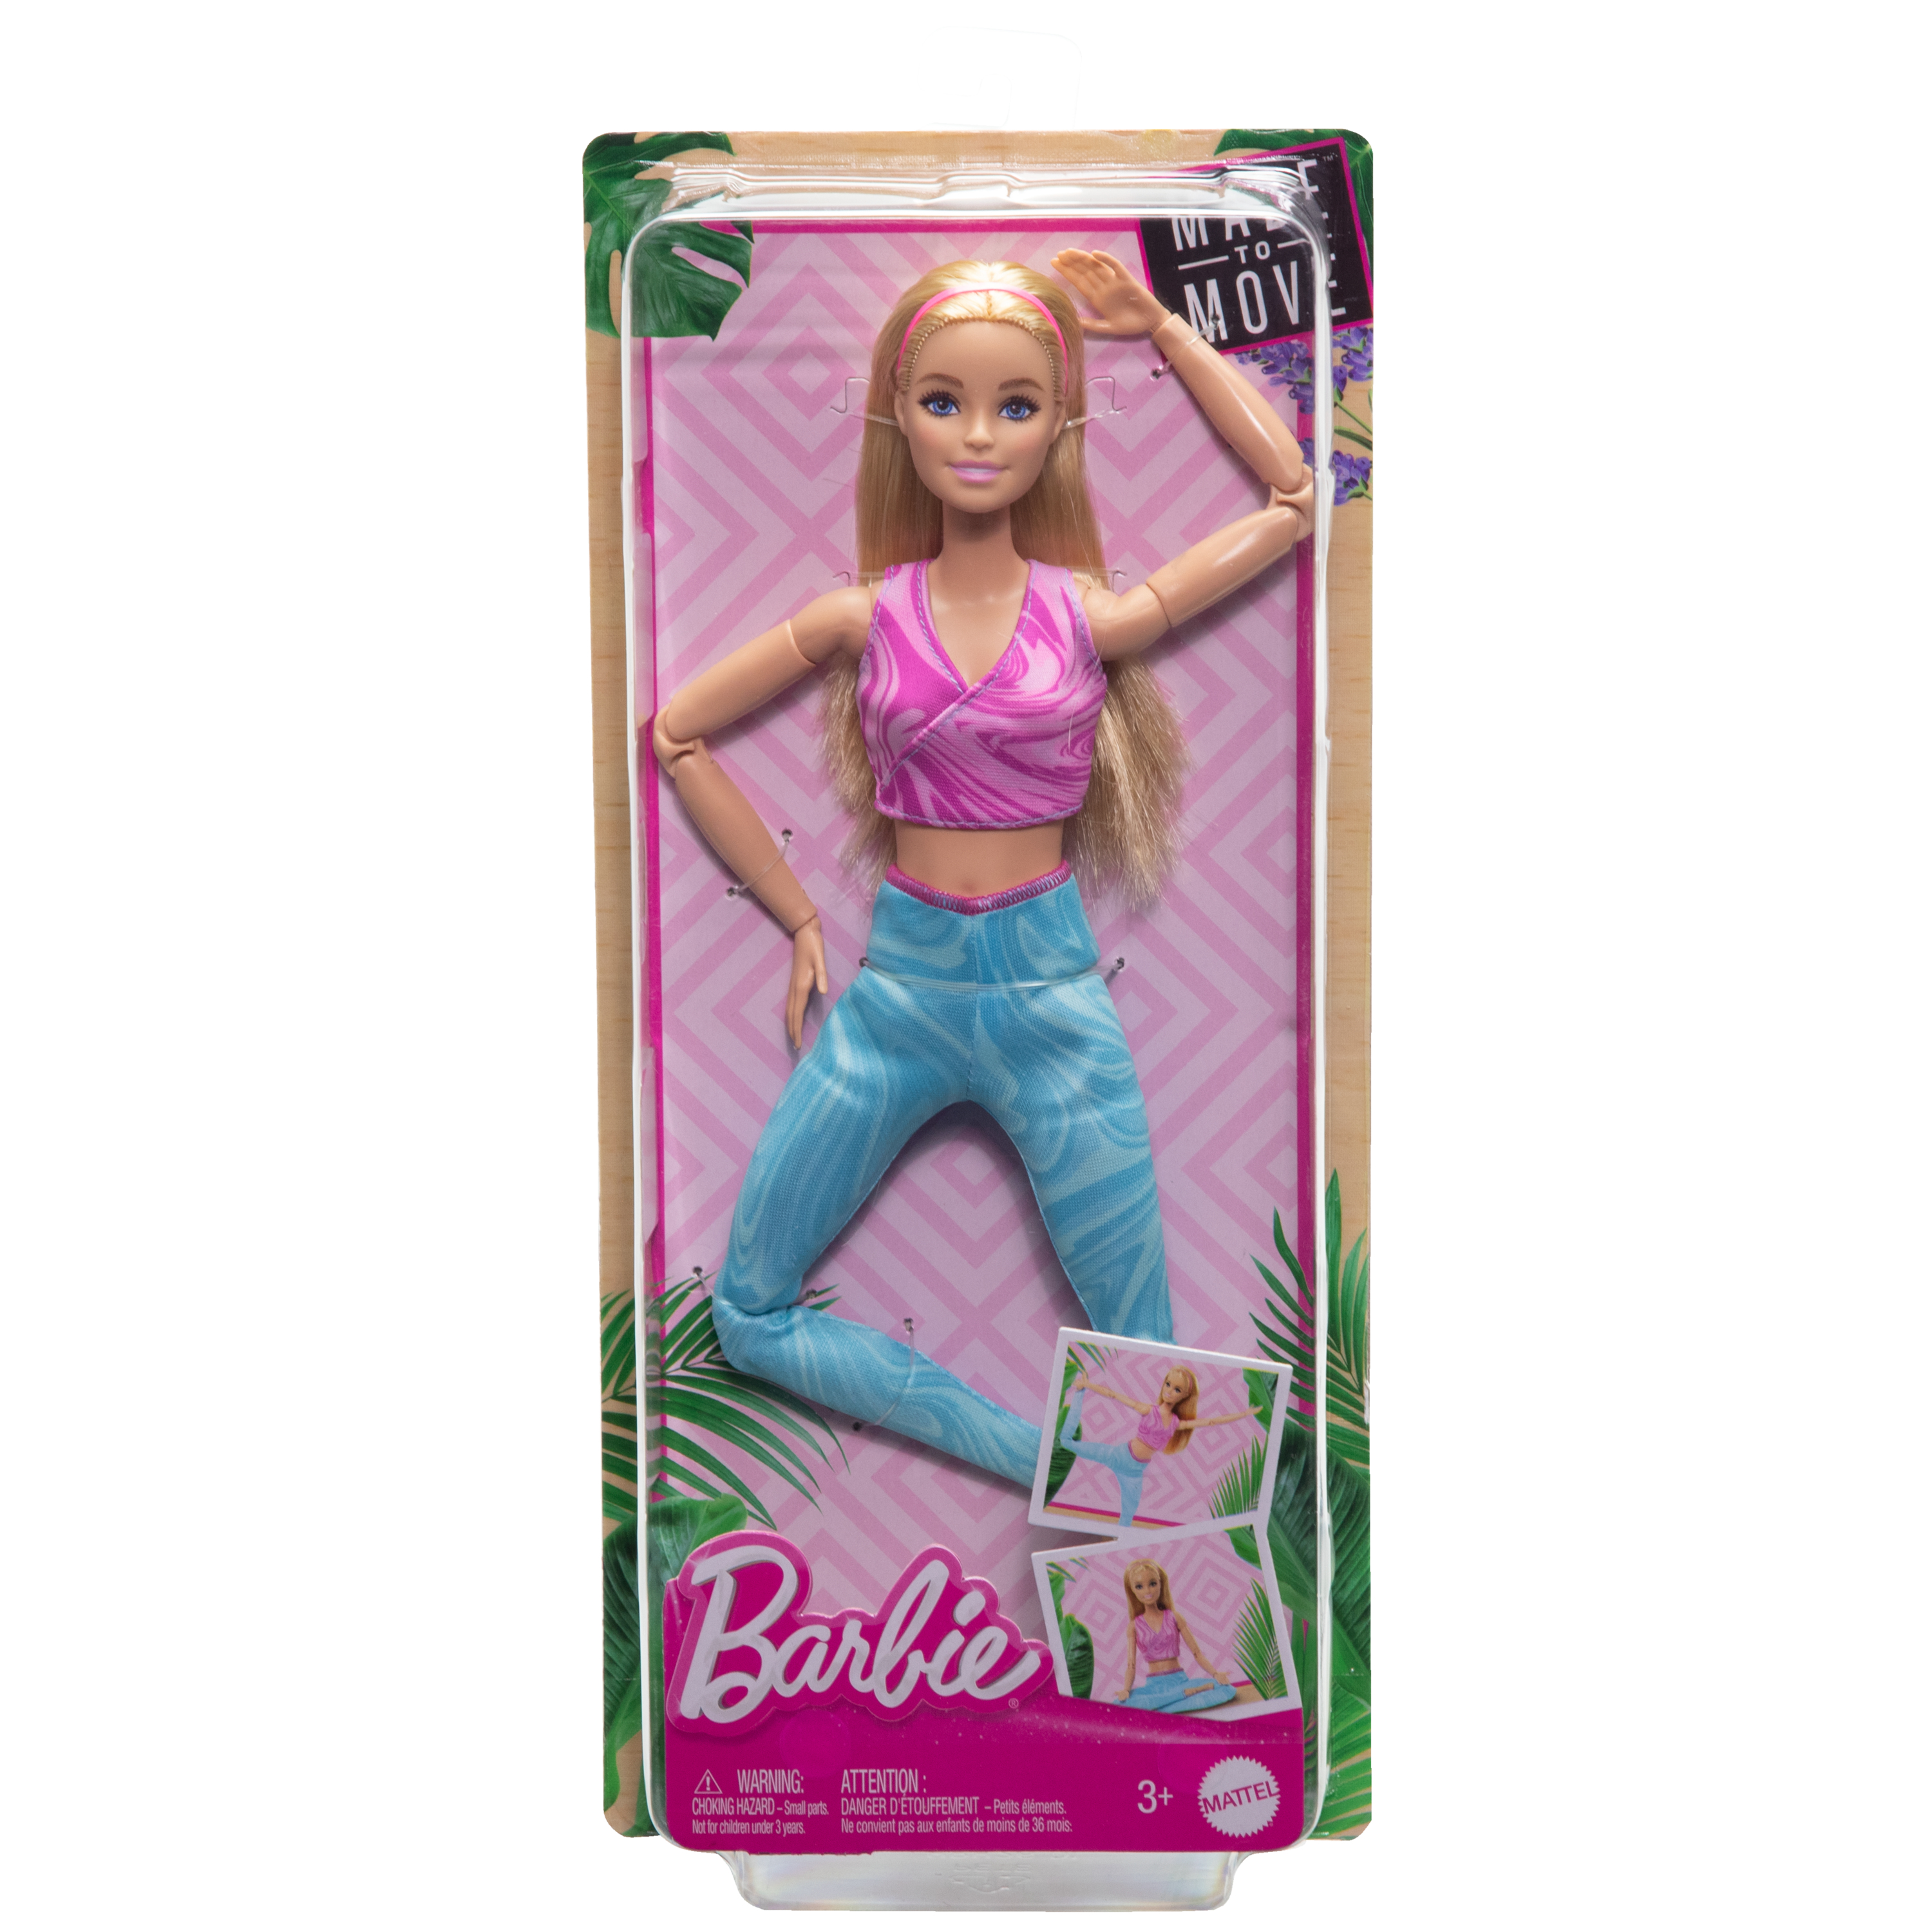 Made to Move Barbie 